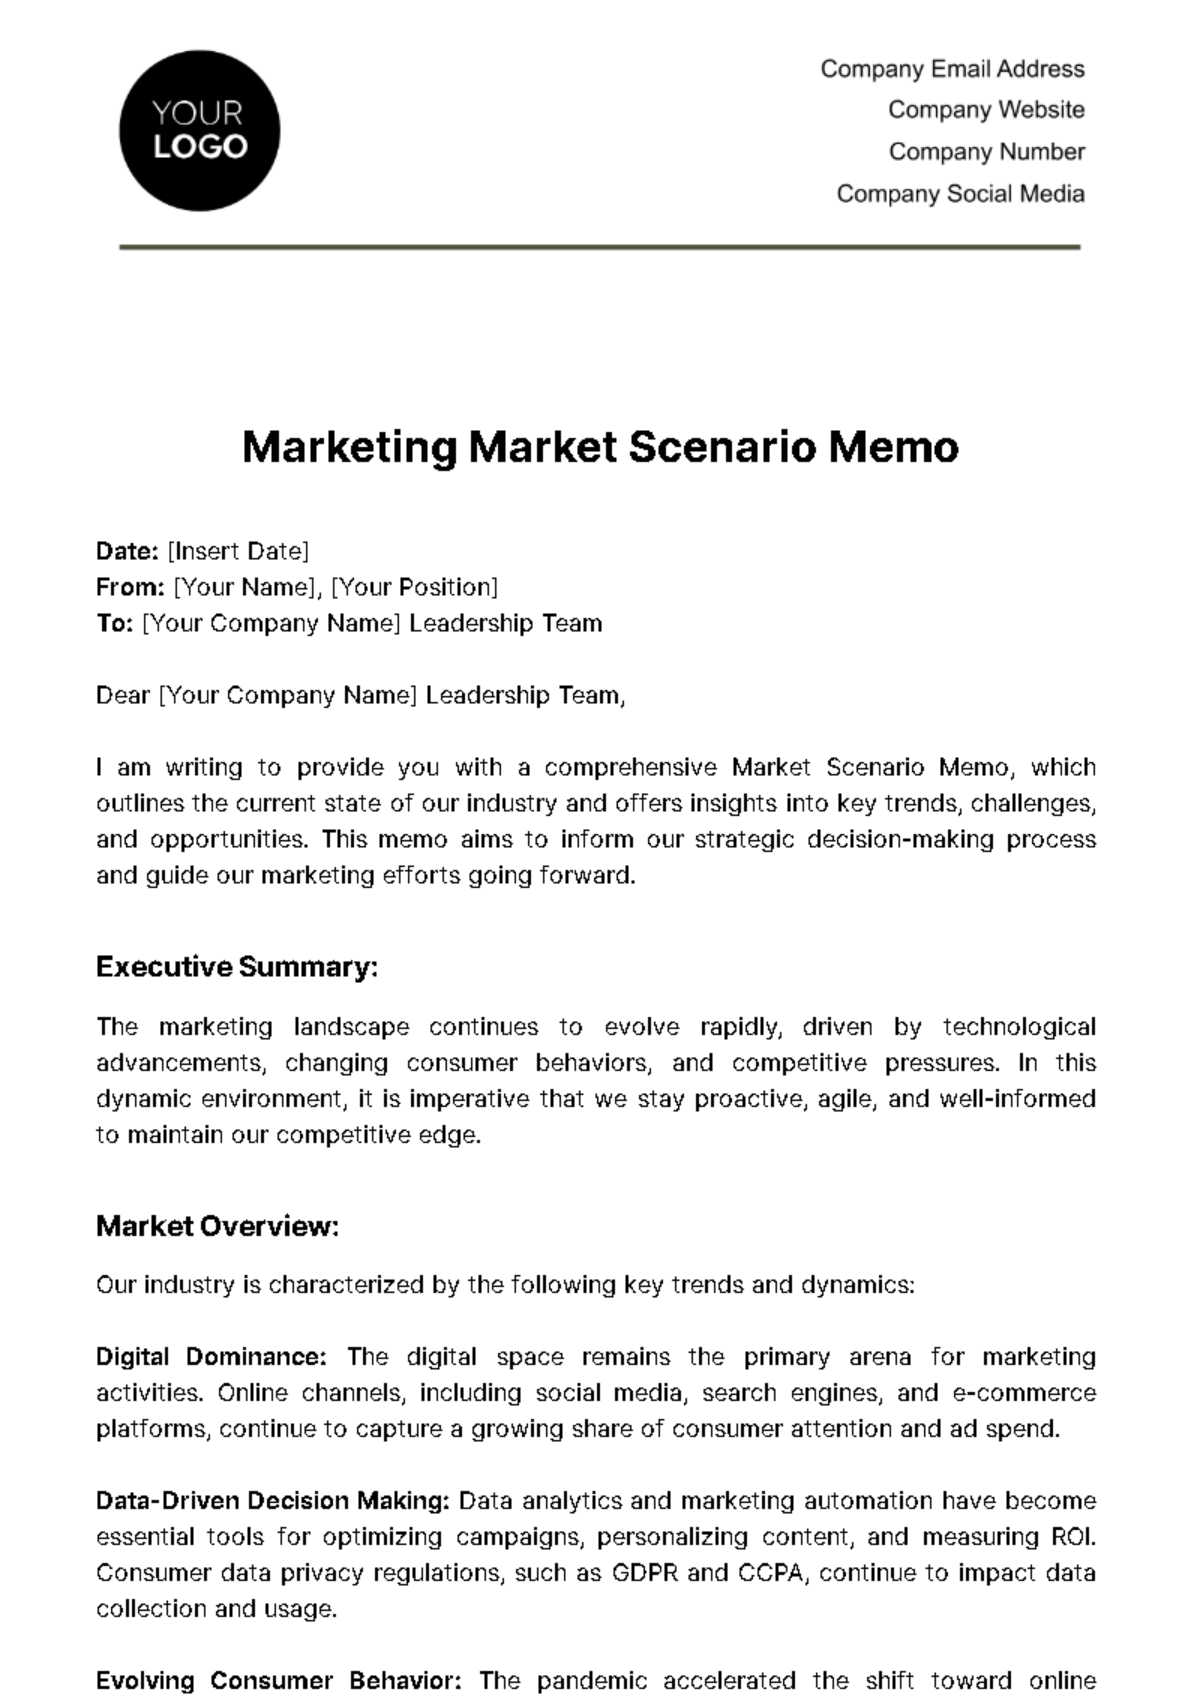 Free Marketing Market Scenario Memo Template